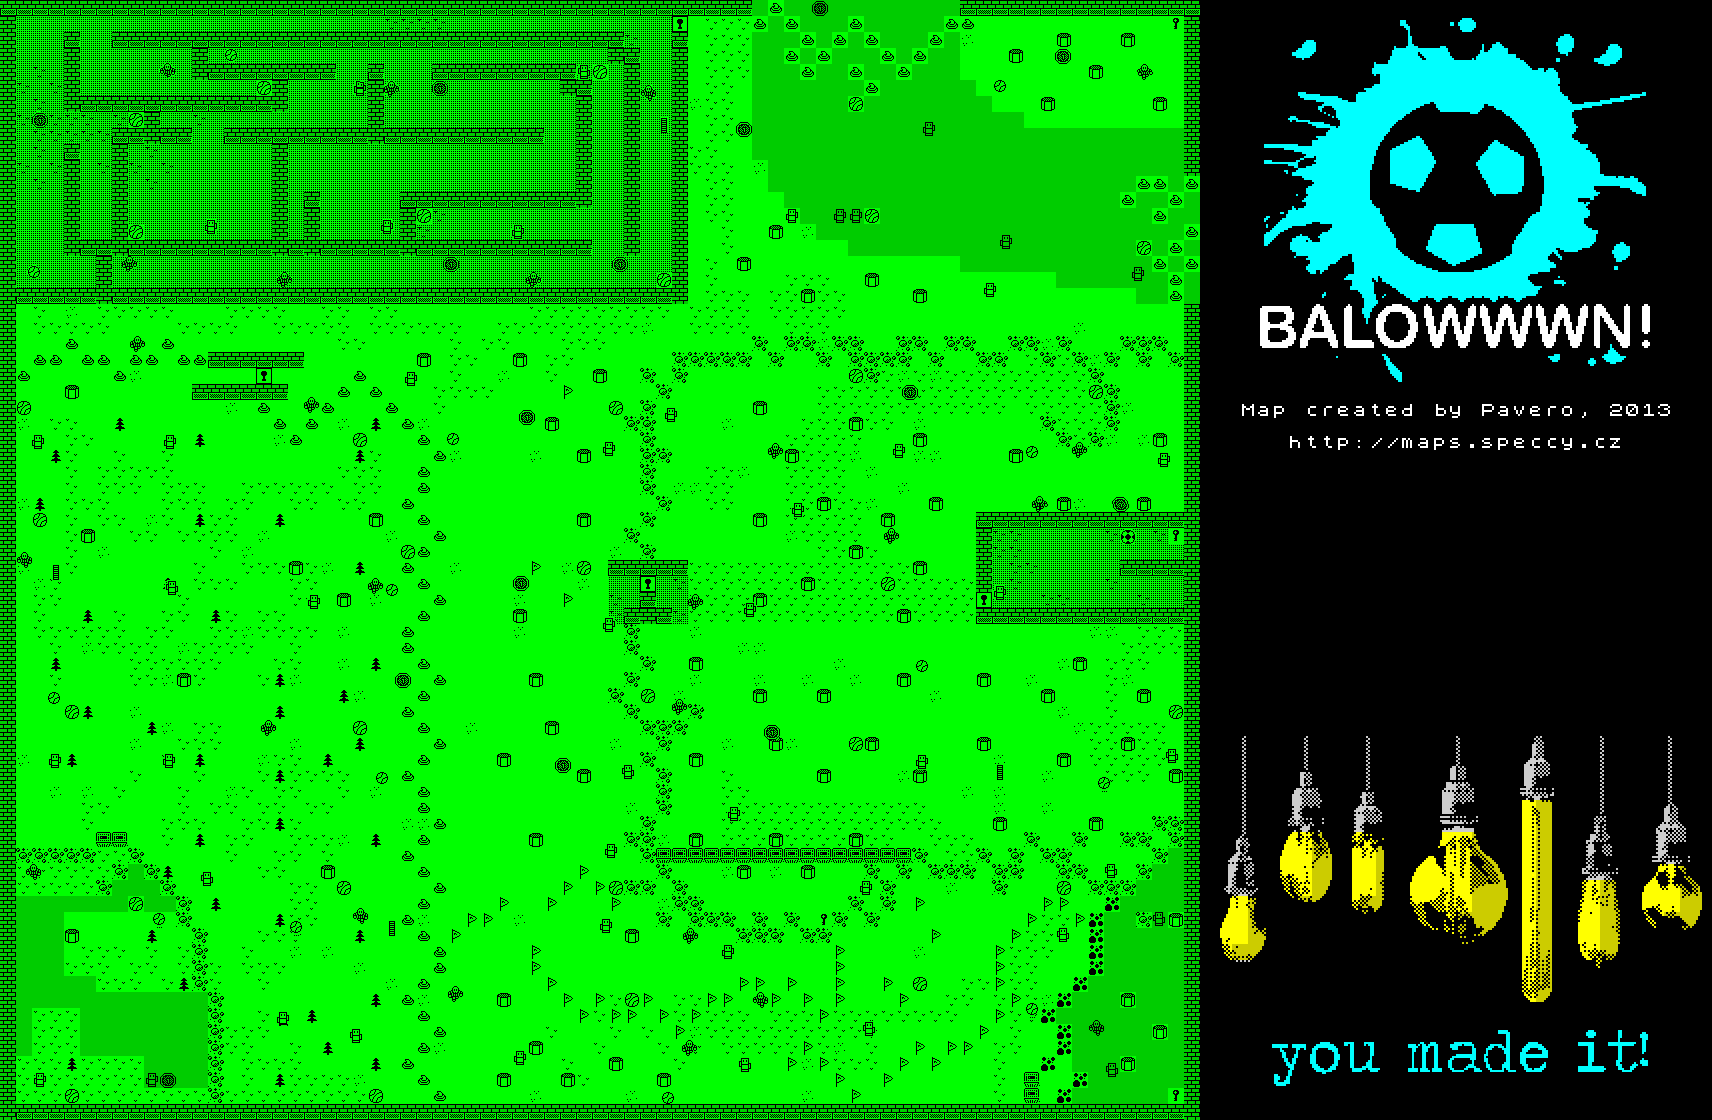 BALOWWWN! - The Map